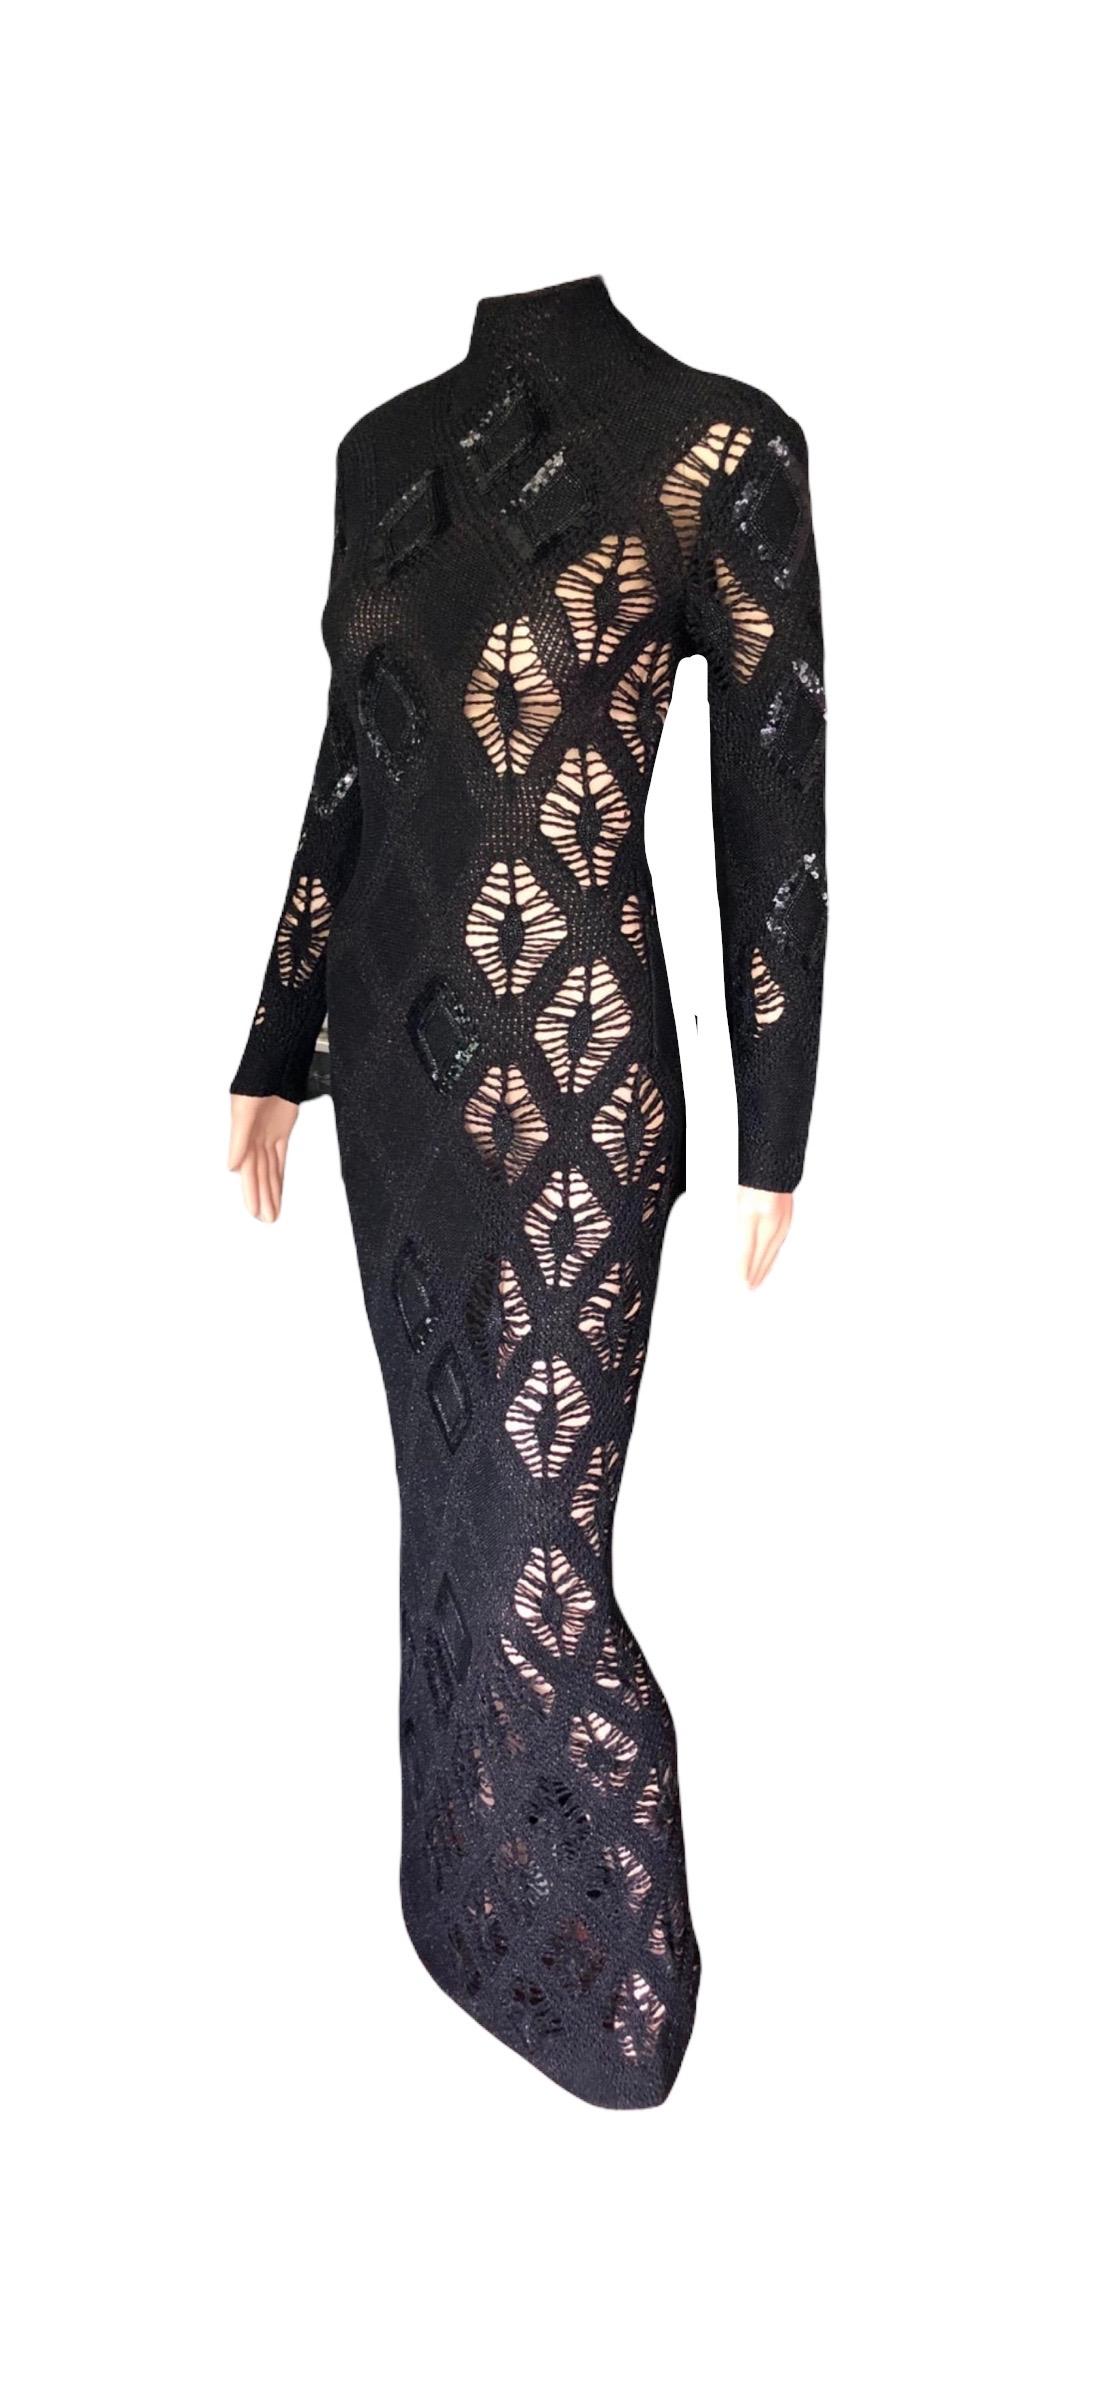 Gianfranco Ferre S/S 2002 Beaded Sequin Sheer Crochet Knit Black Maxi Dress Gown For Sale 6